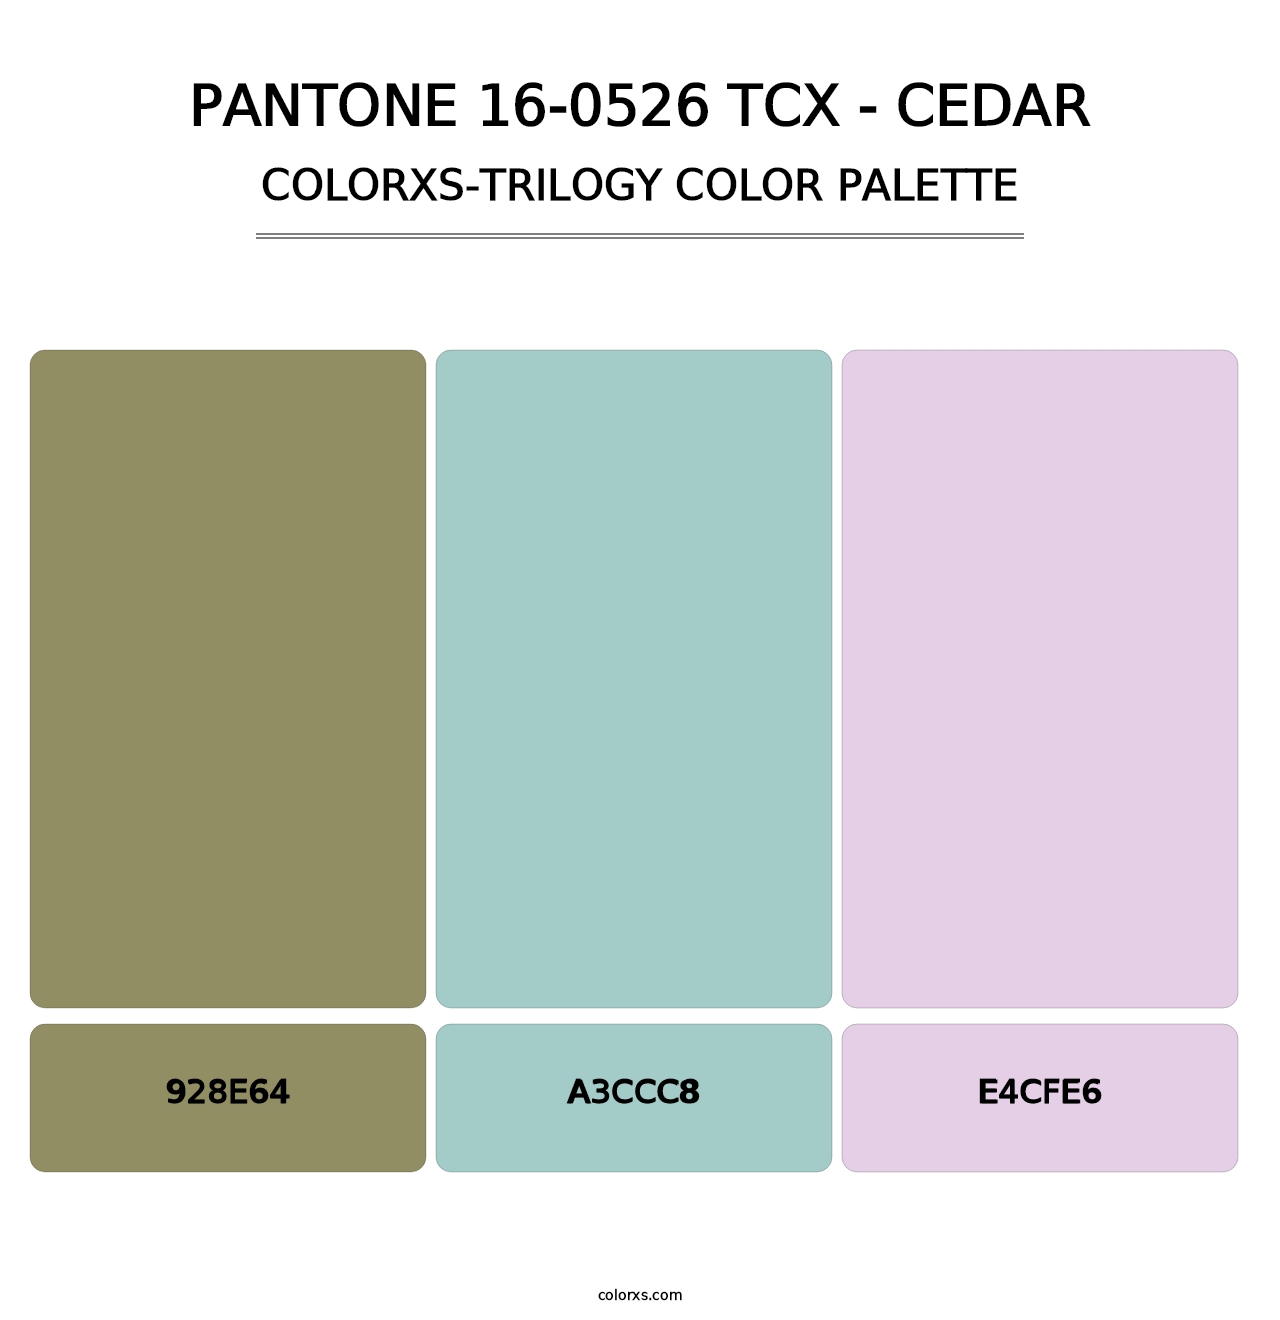 PANTONE 16-0526 TCX - Cedar - Colorxs Trilogy Palette